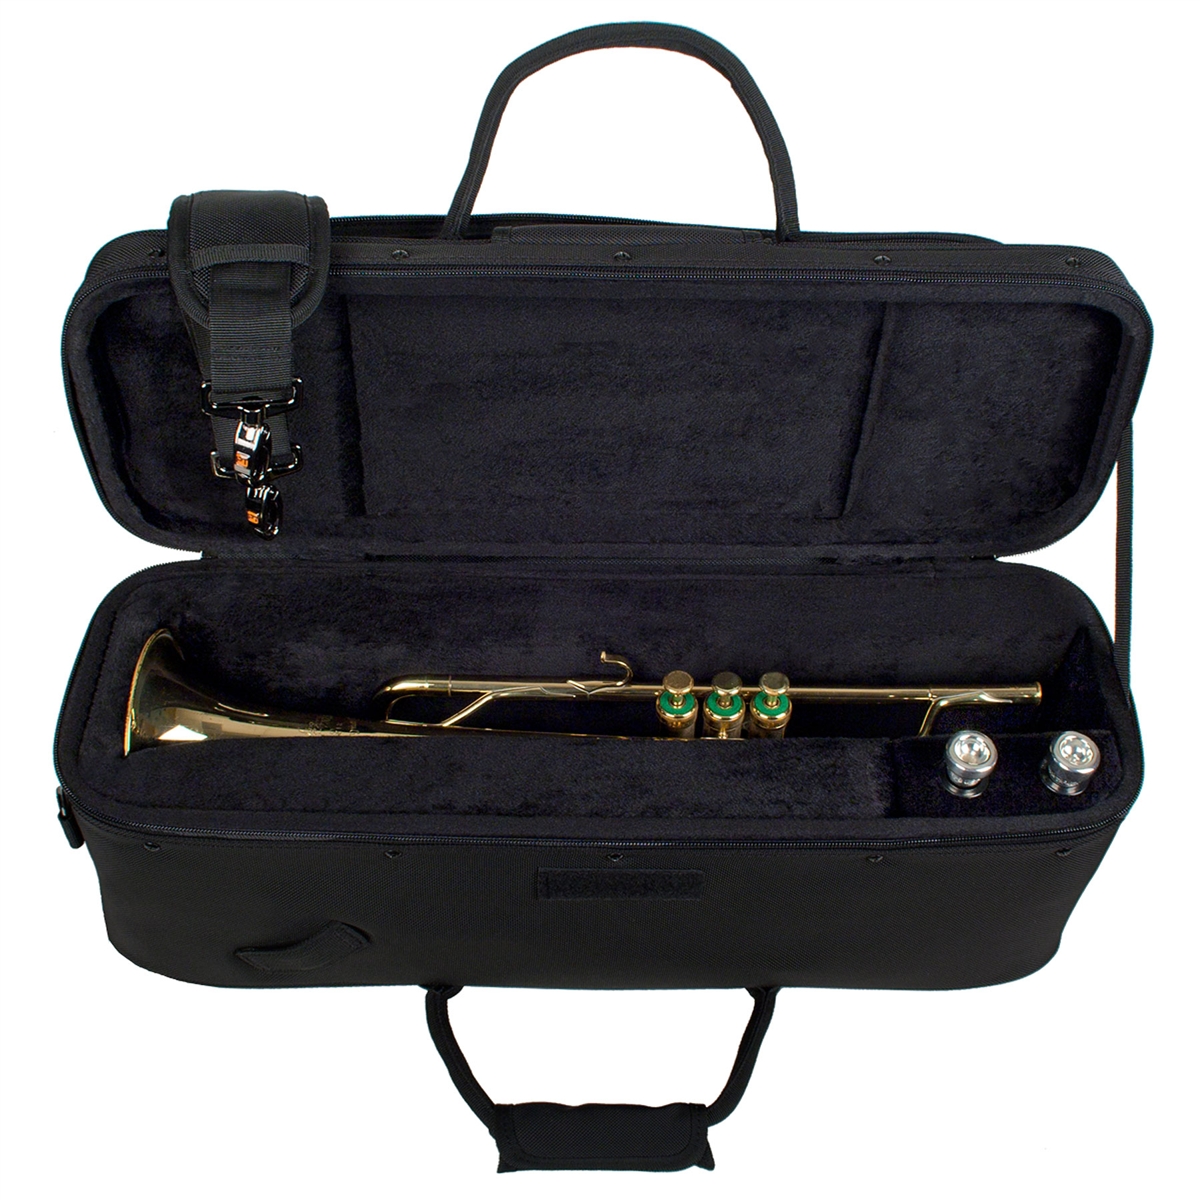 Protec PB301SCL Slimline Case for Trumpet